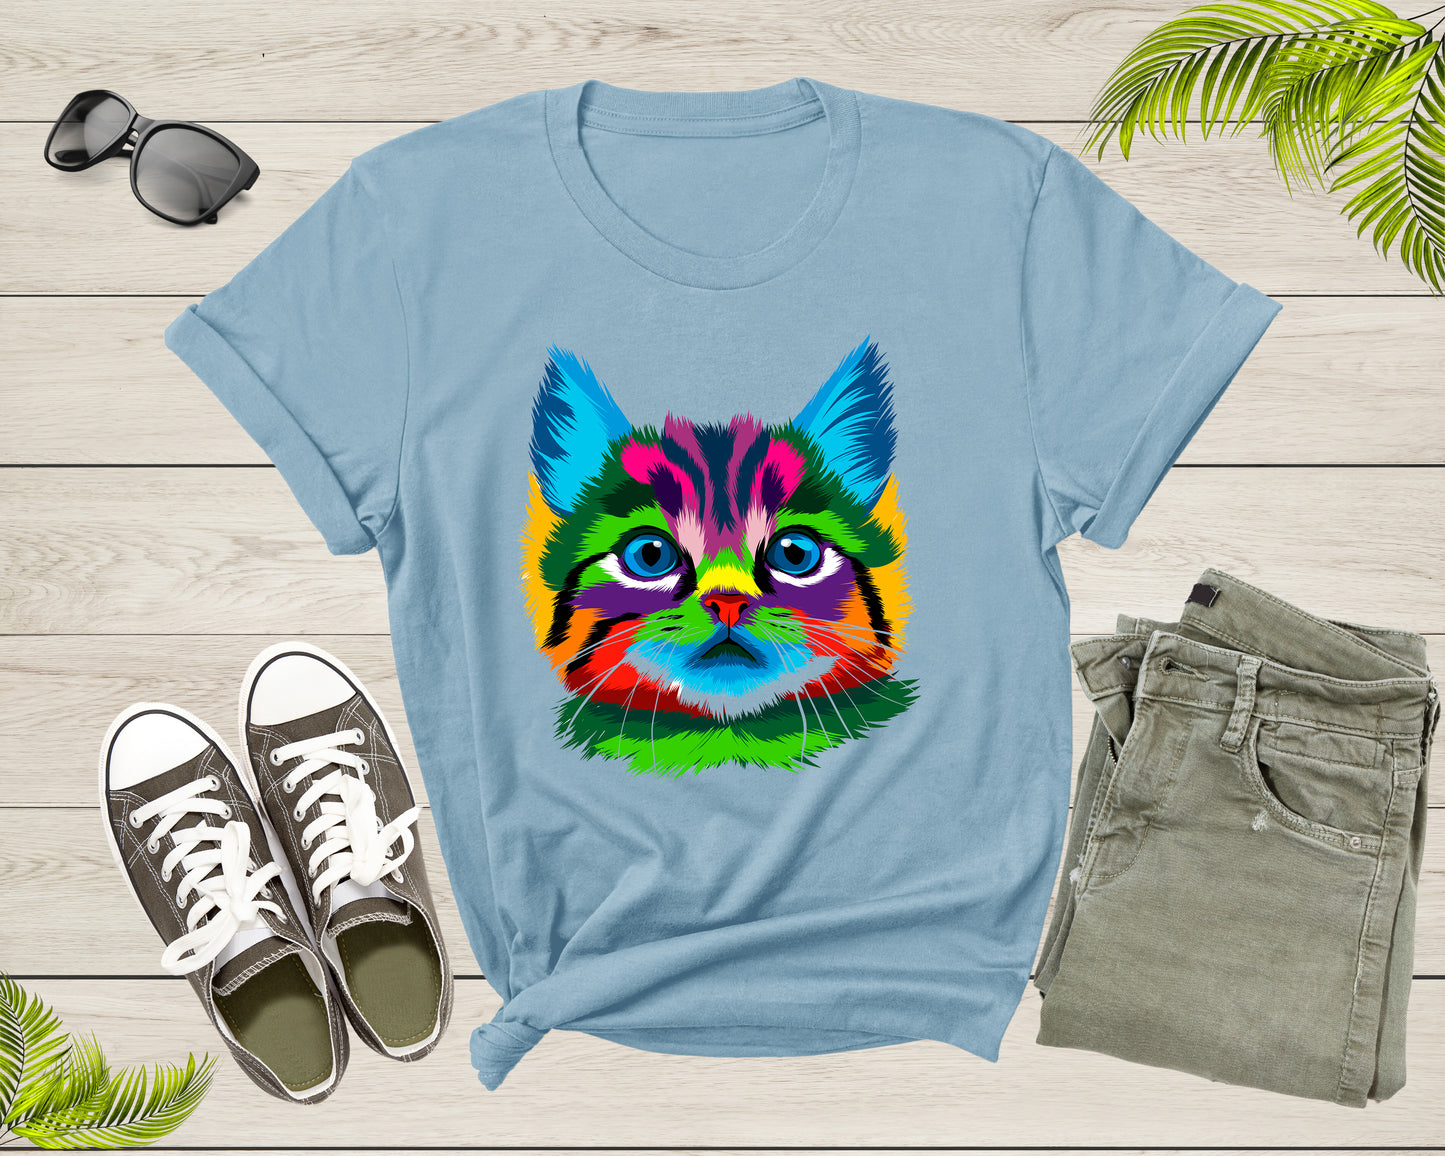 Cute Cool Colorful Cat Face Kitten Kitty Pet Cuddly Cat T-Shirt Cat Lover Gift T Shirt for Men Women Kids Boys Girls Kitten Graphic TShirt